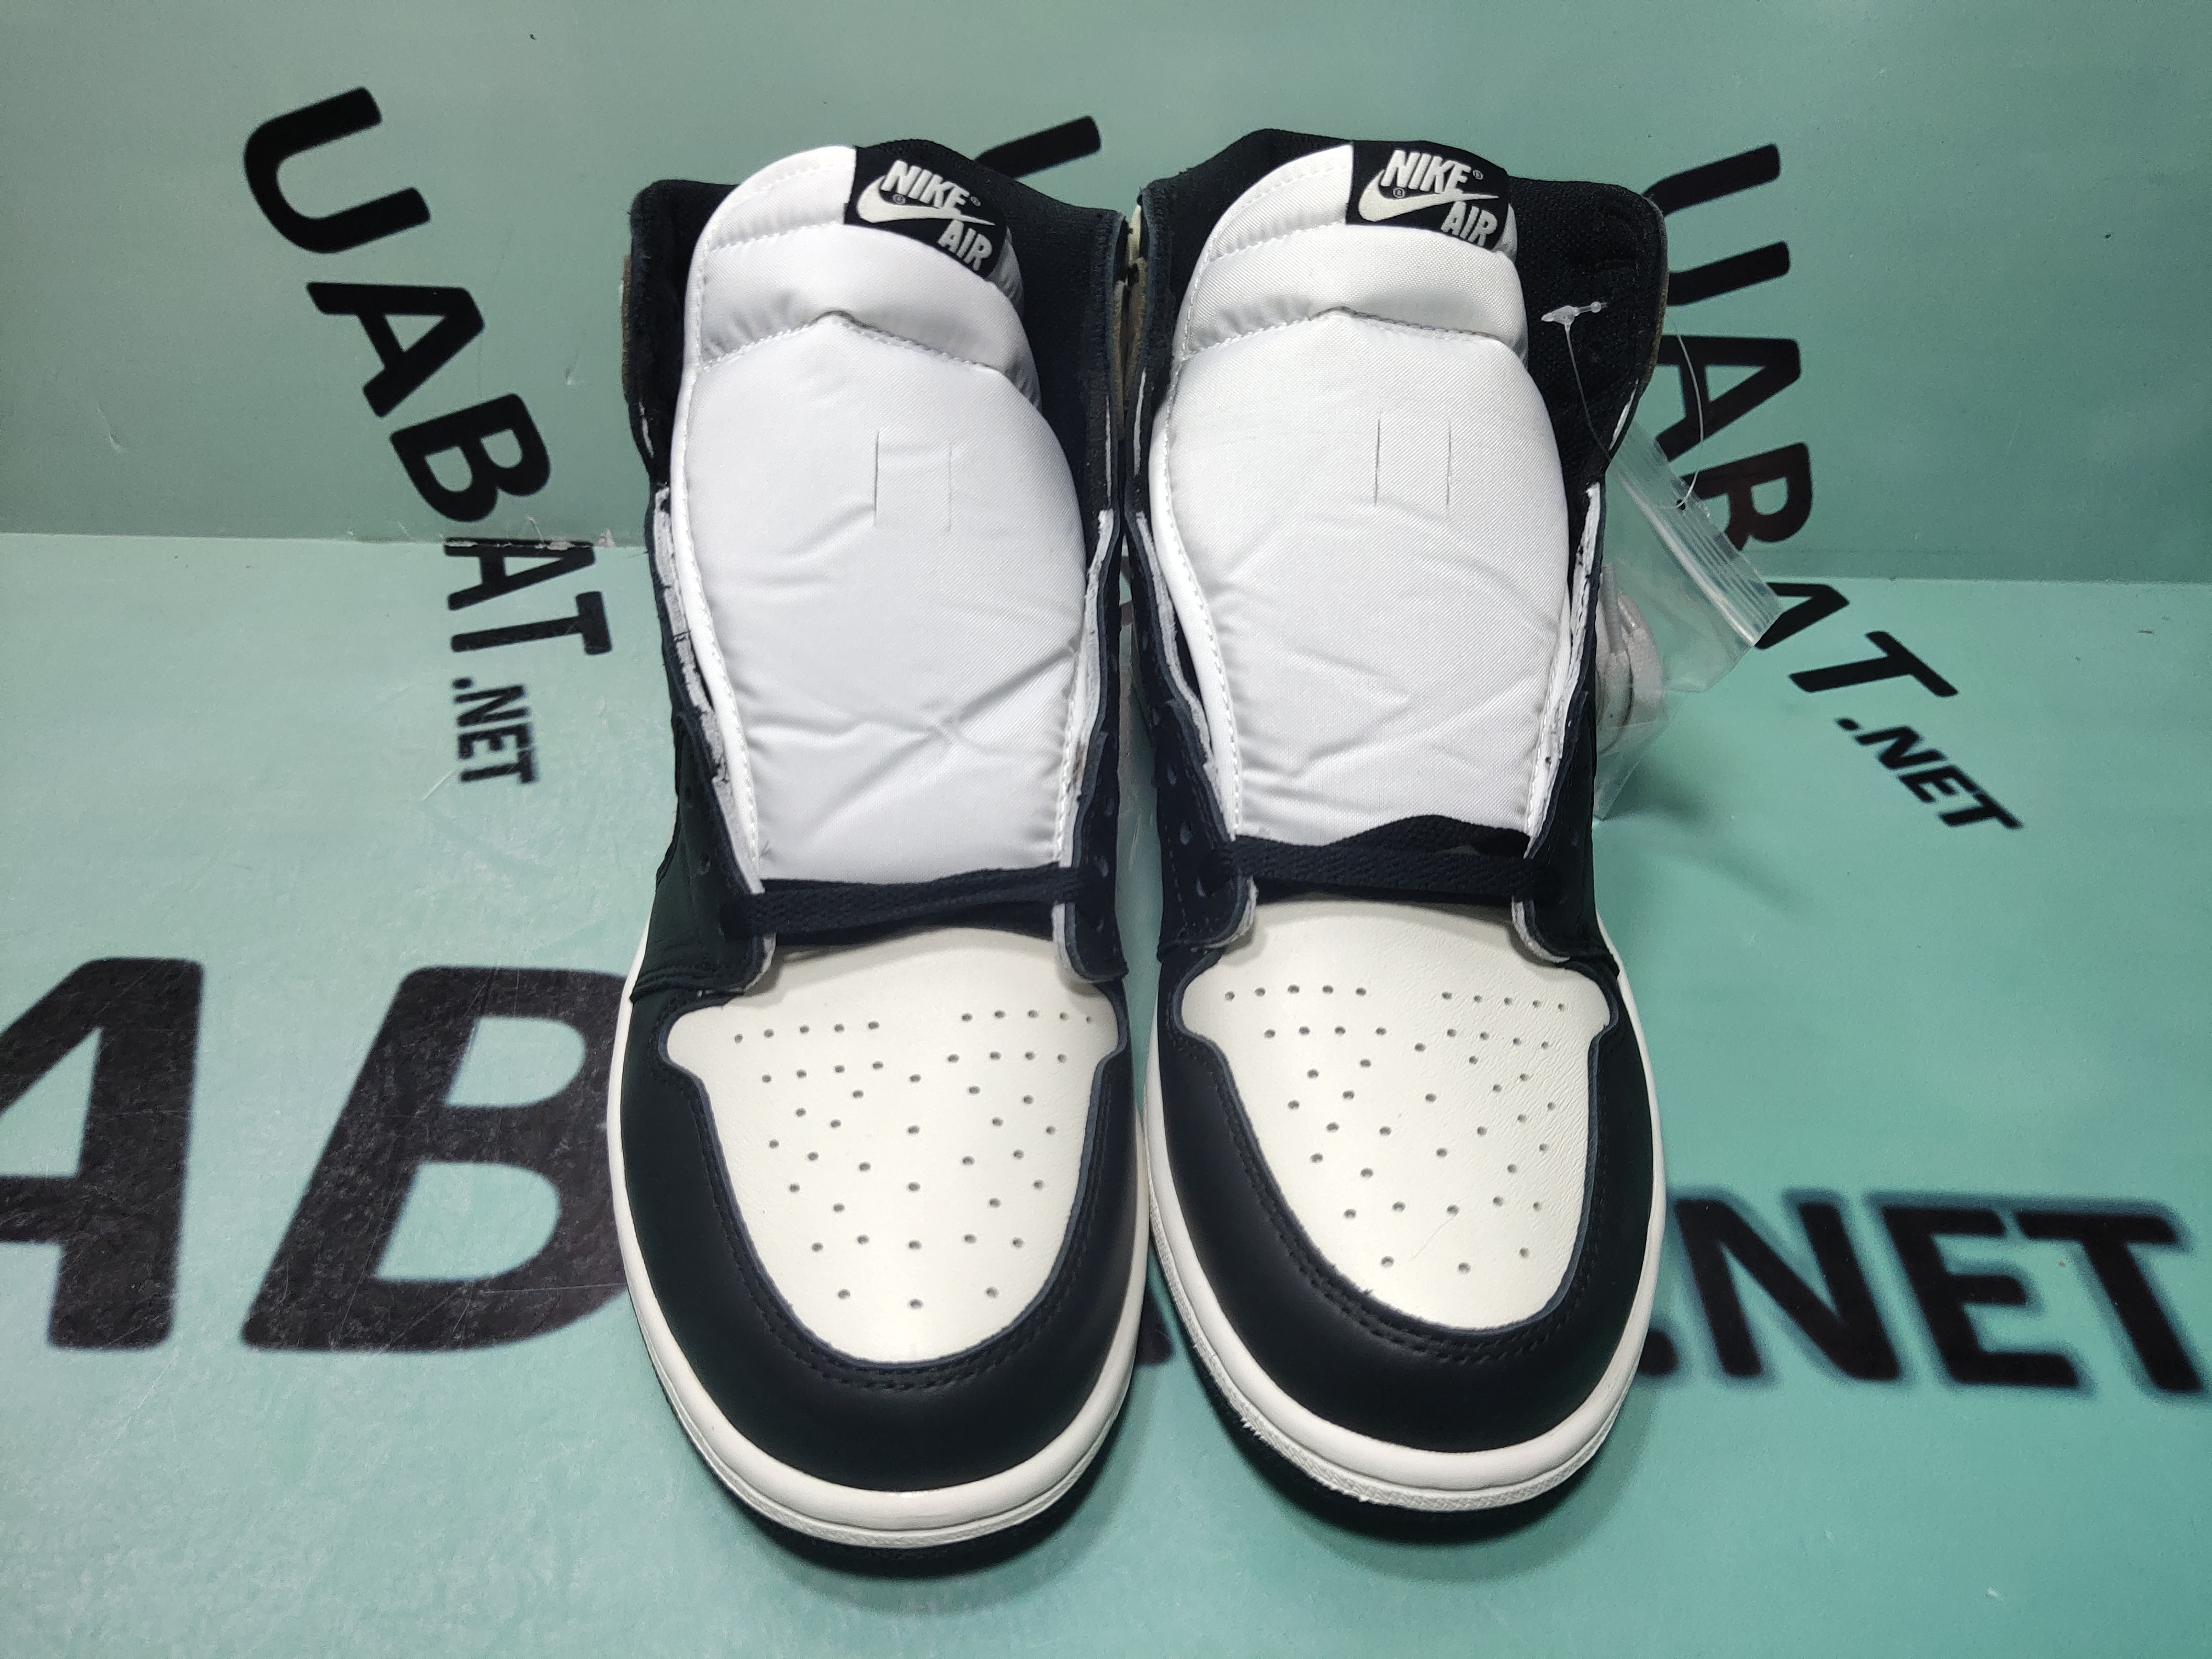 Javier Baezs custom Air Jordan 1 cleats